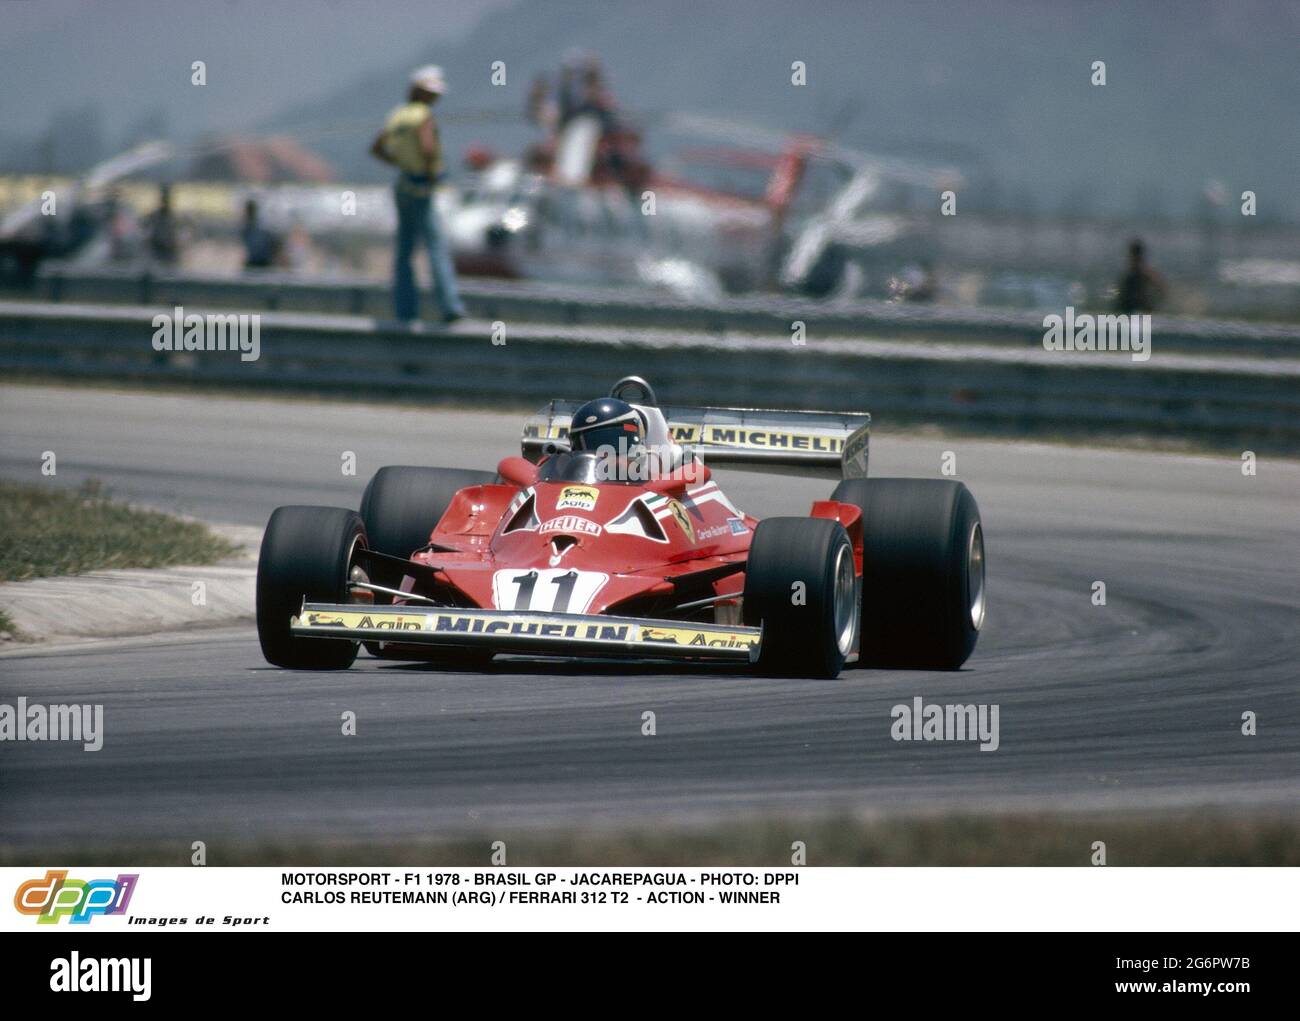 MOTORSPORT - F1 1978 - BRASIL GP - JACAREPAGUA - PHOTO: DPPI CARLOS REUTEMANN (ARG) / FERRARI 312 T2 - ACTION - WINNER Stock Photo